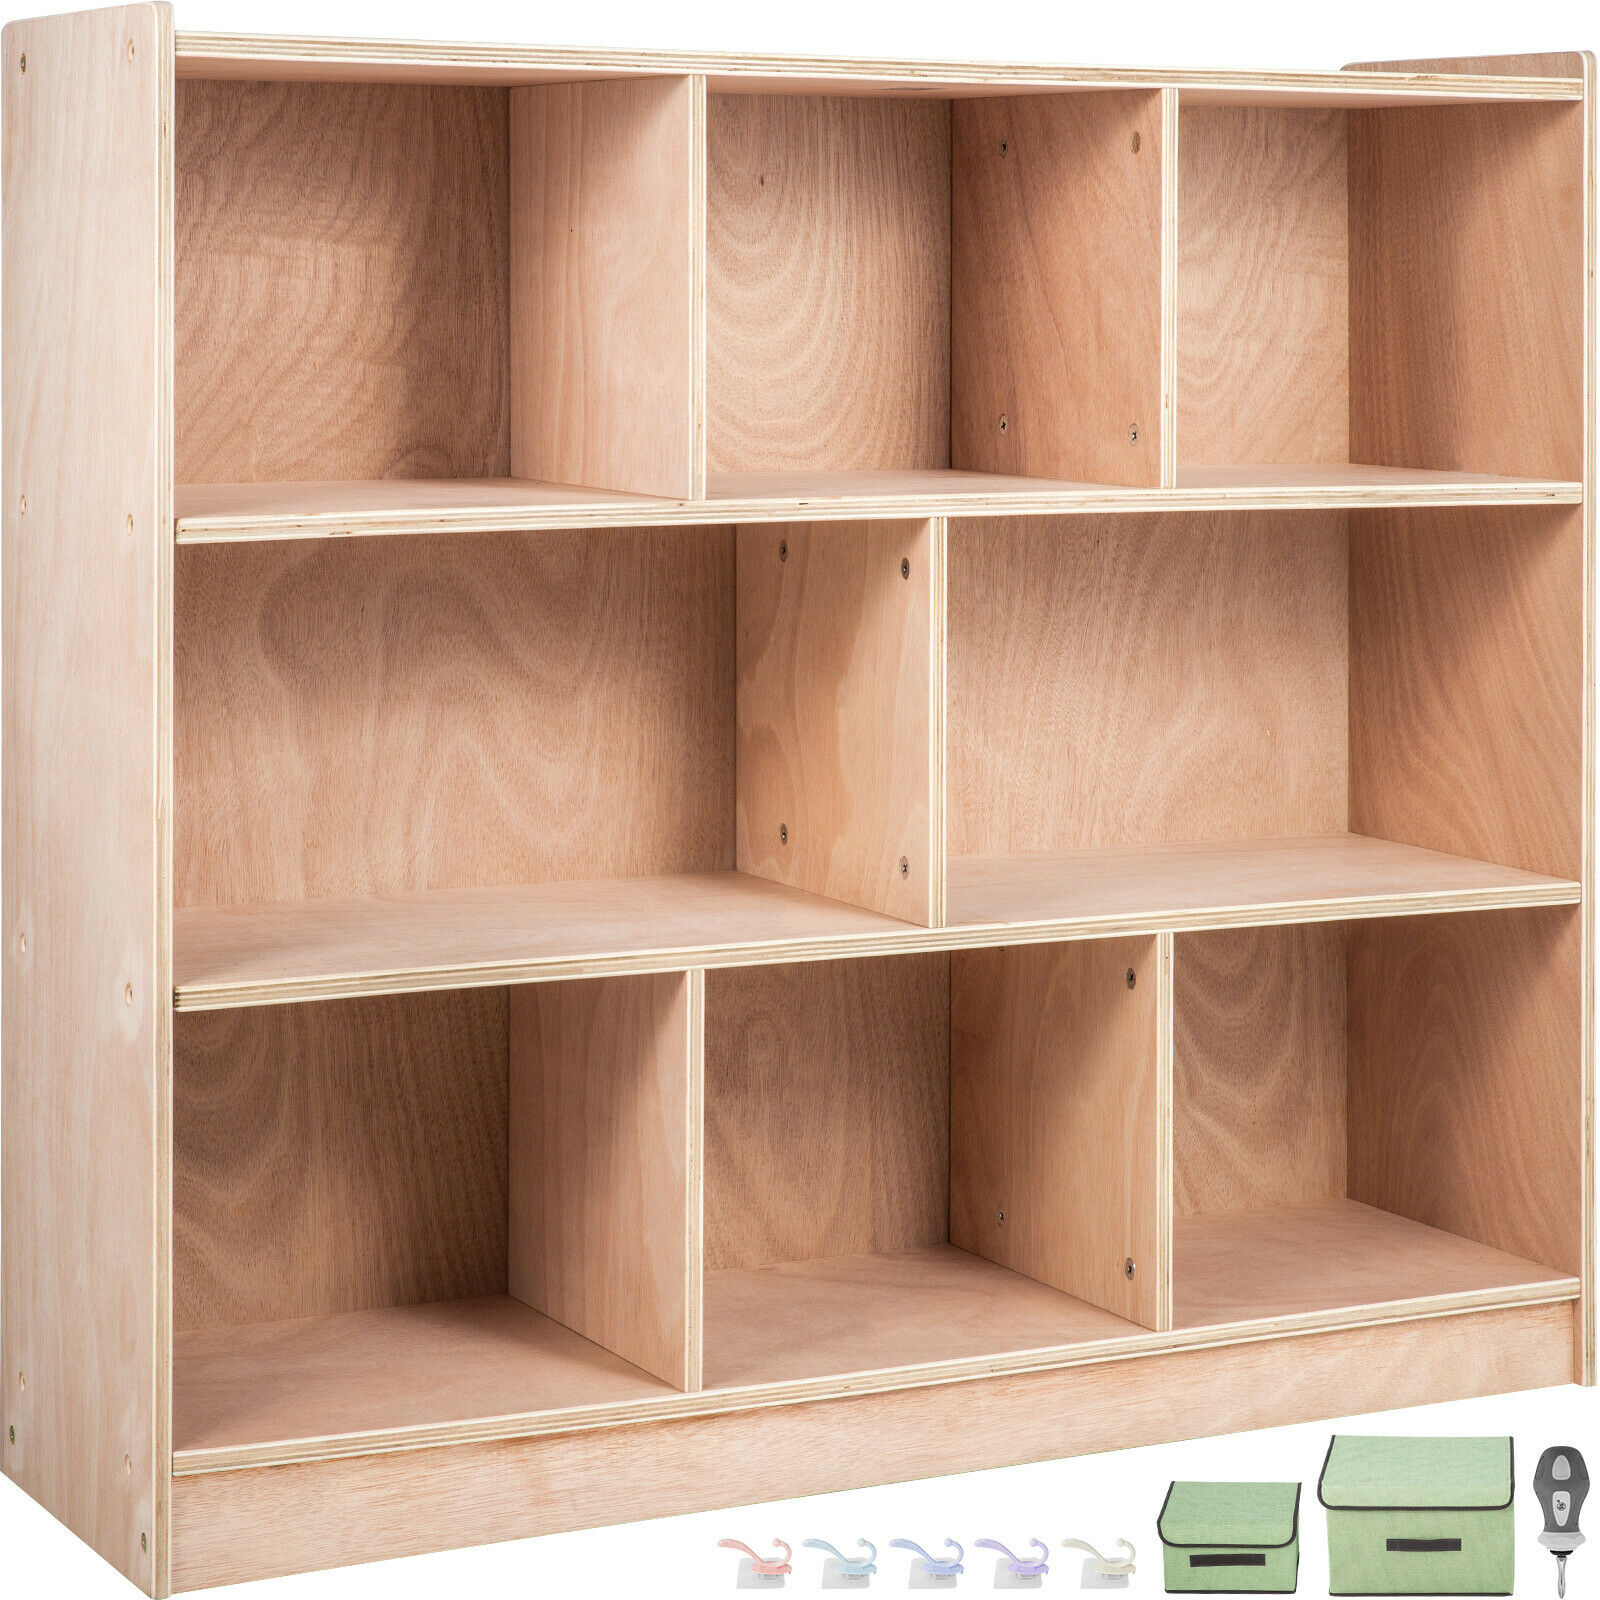 Cubby Storage Units,20 Grids,Wood